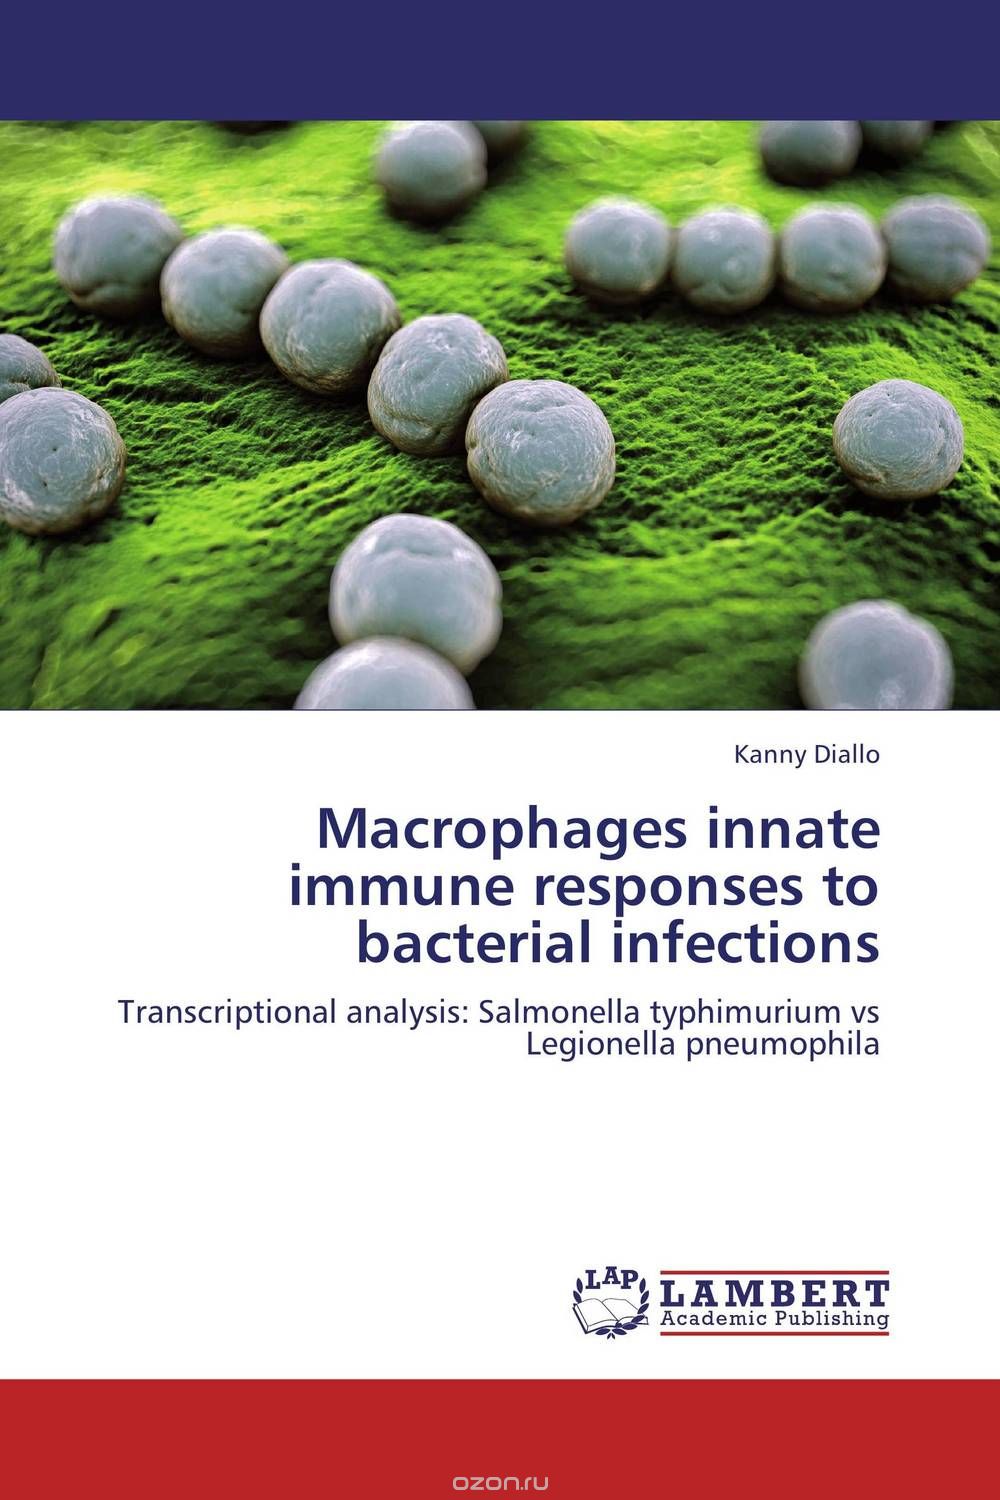 Скачать книгу "Macrophages innate immune responses to bacterial infections"